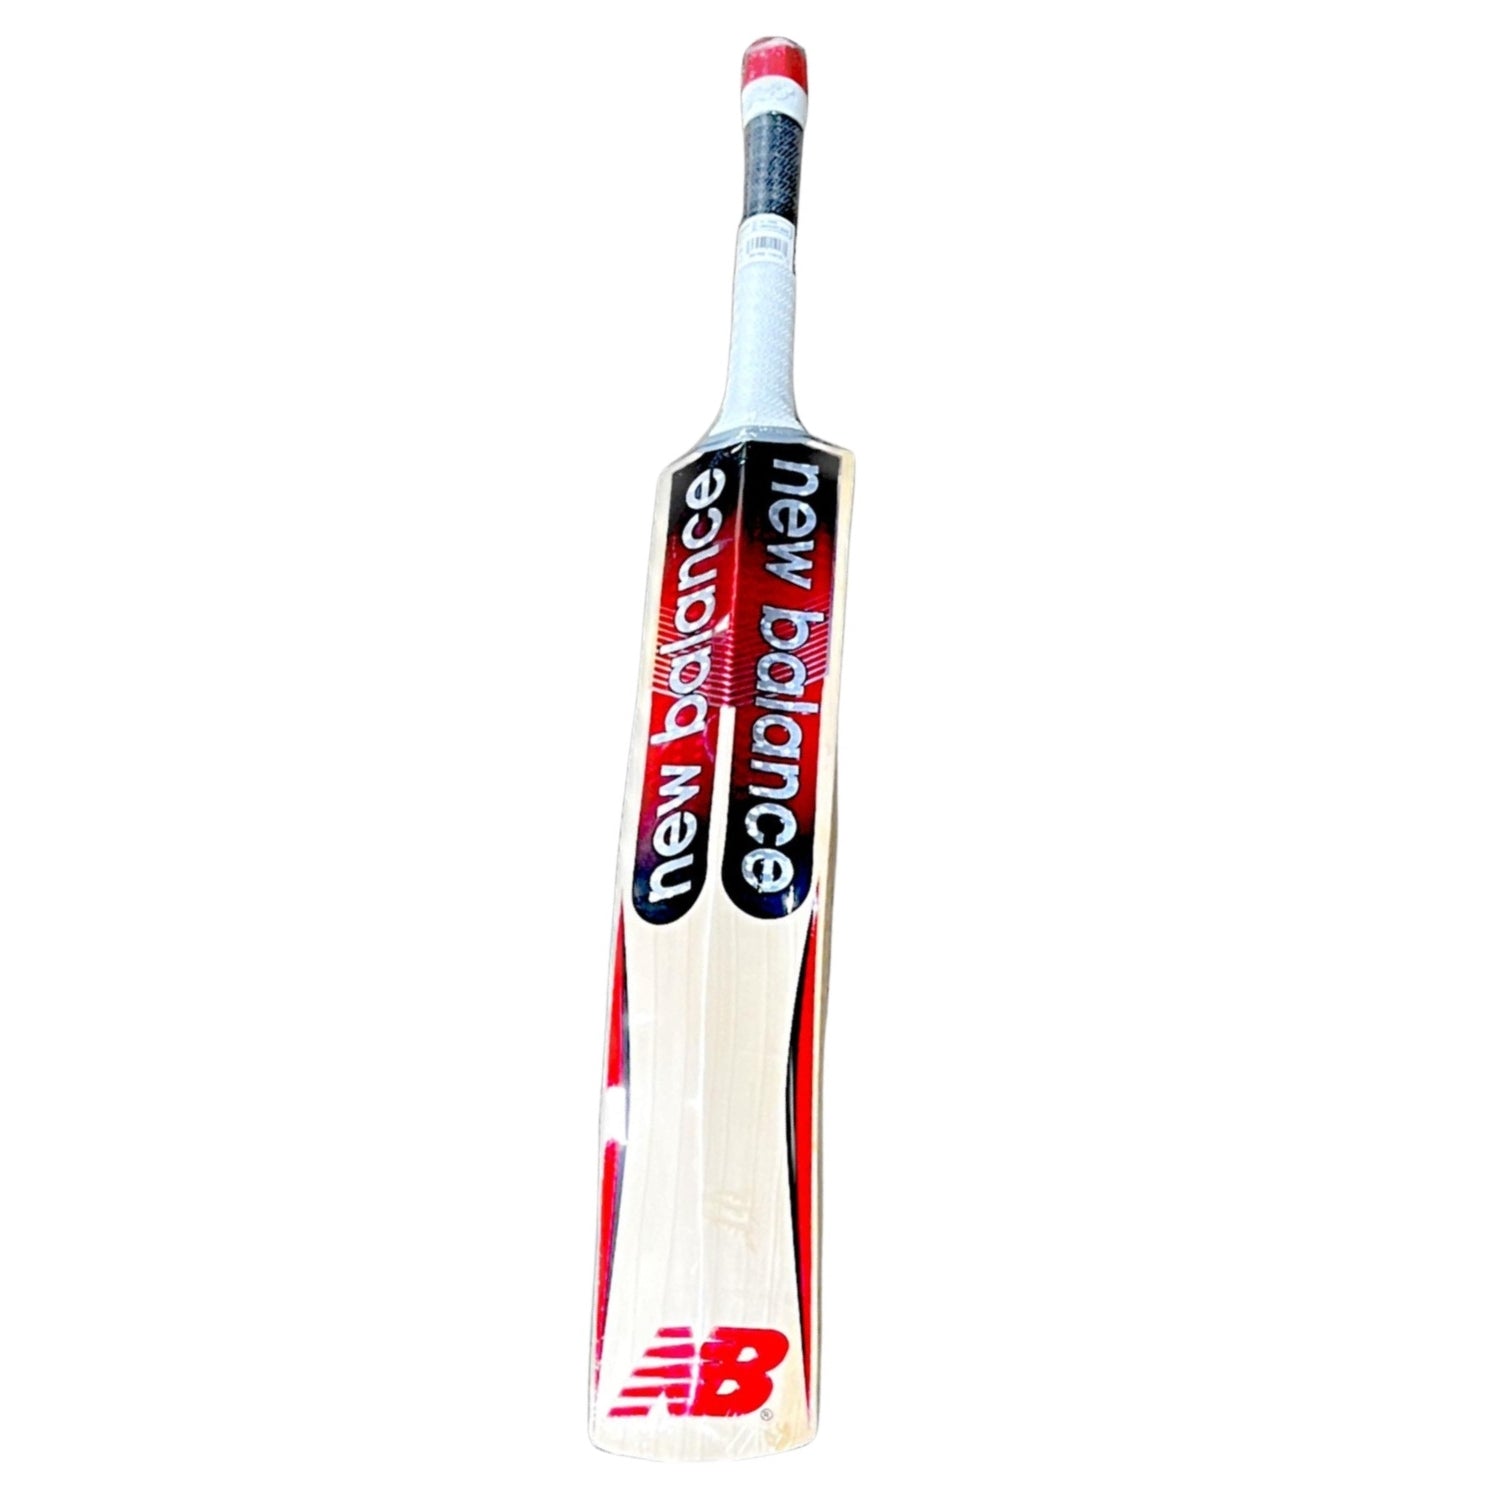 New Balance TC 1060 English Willow Cricket Bat, SH